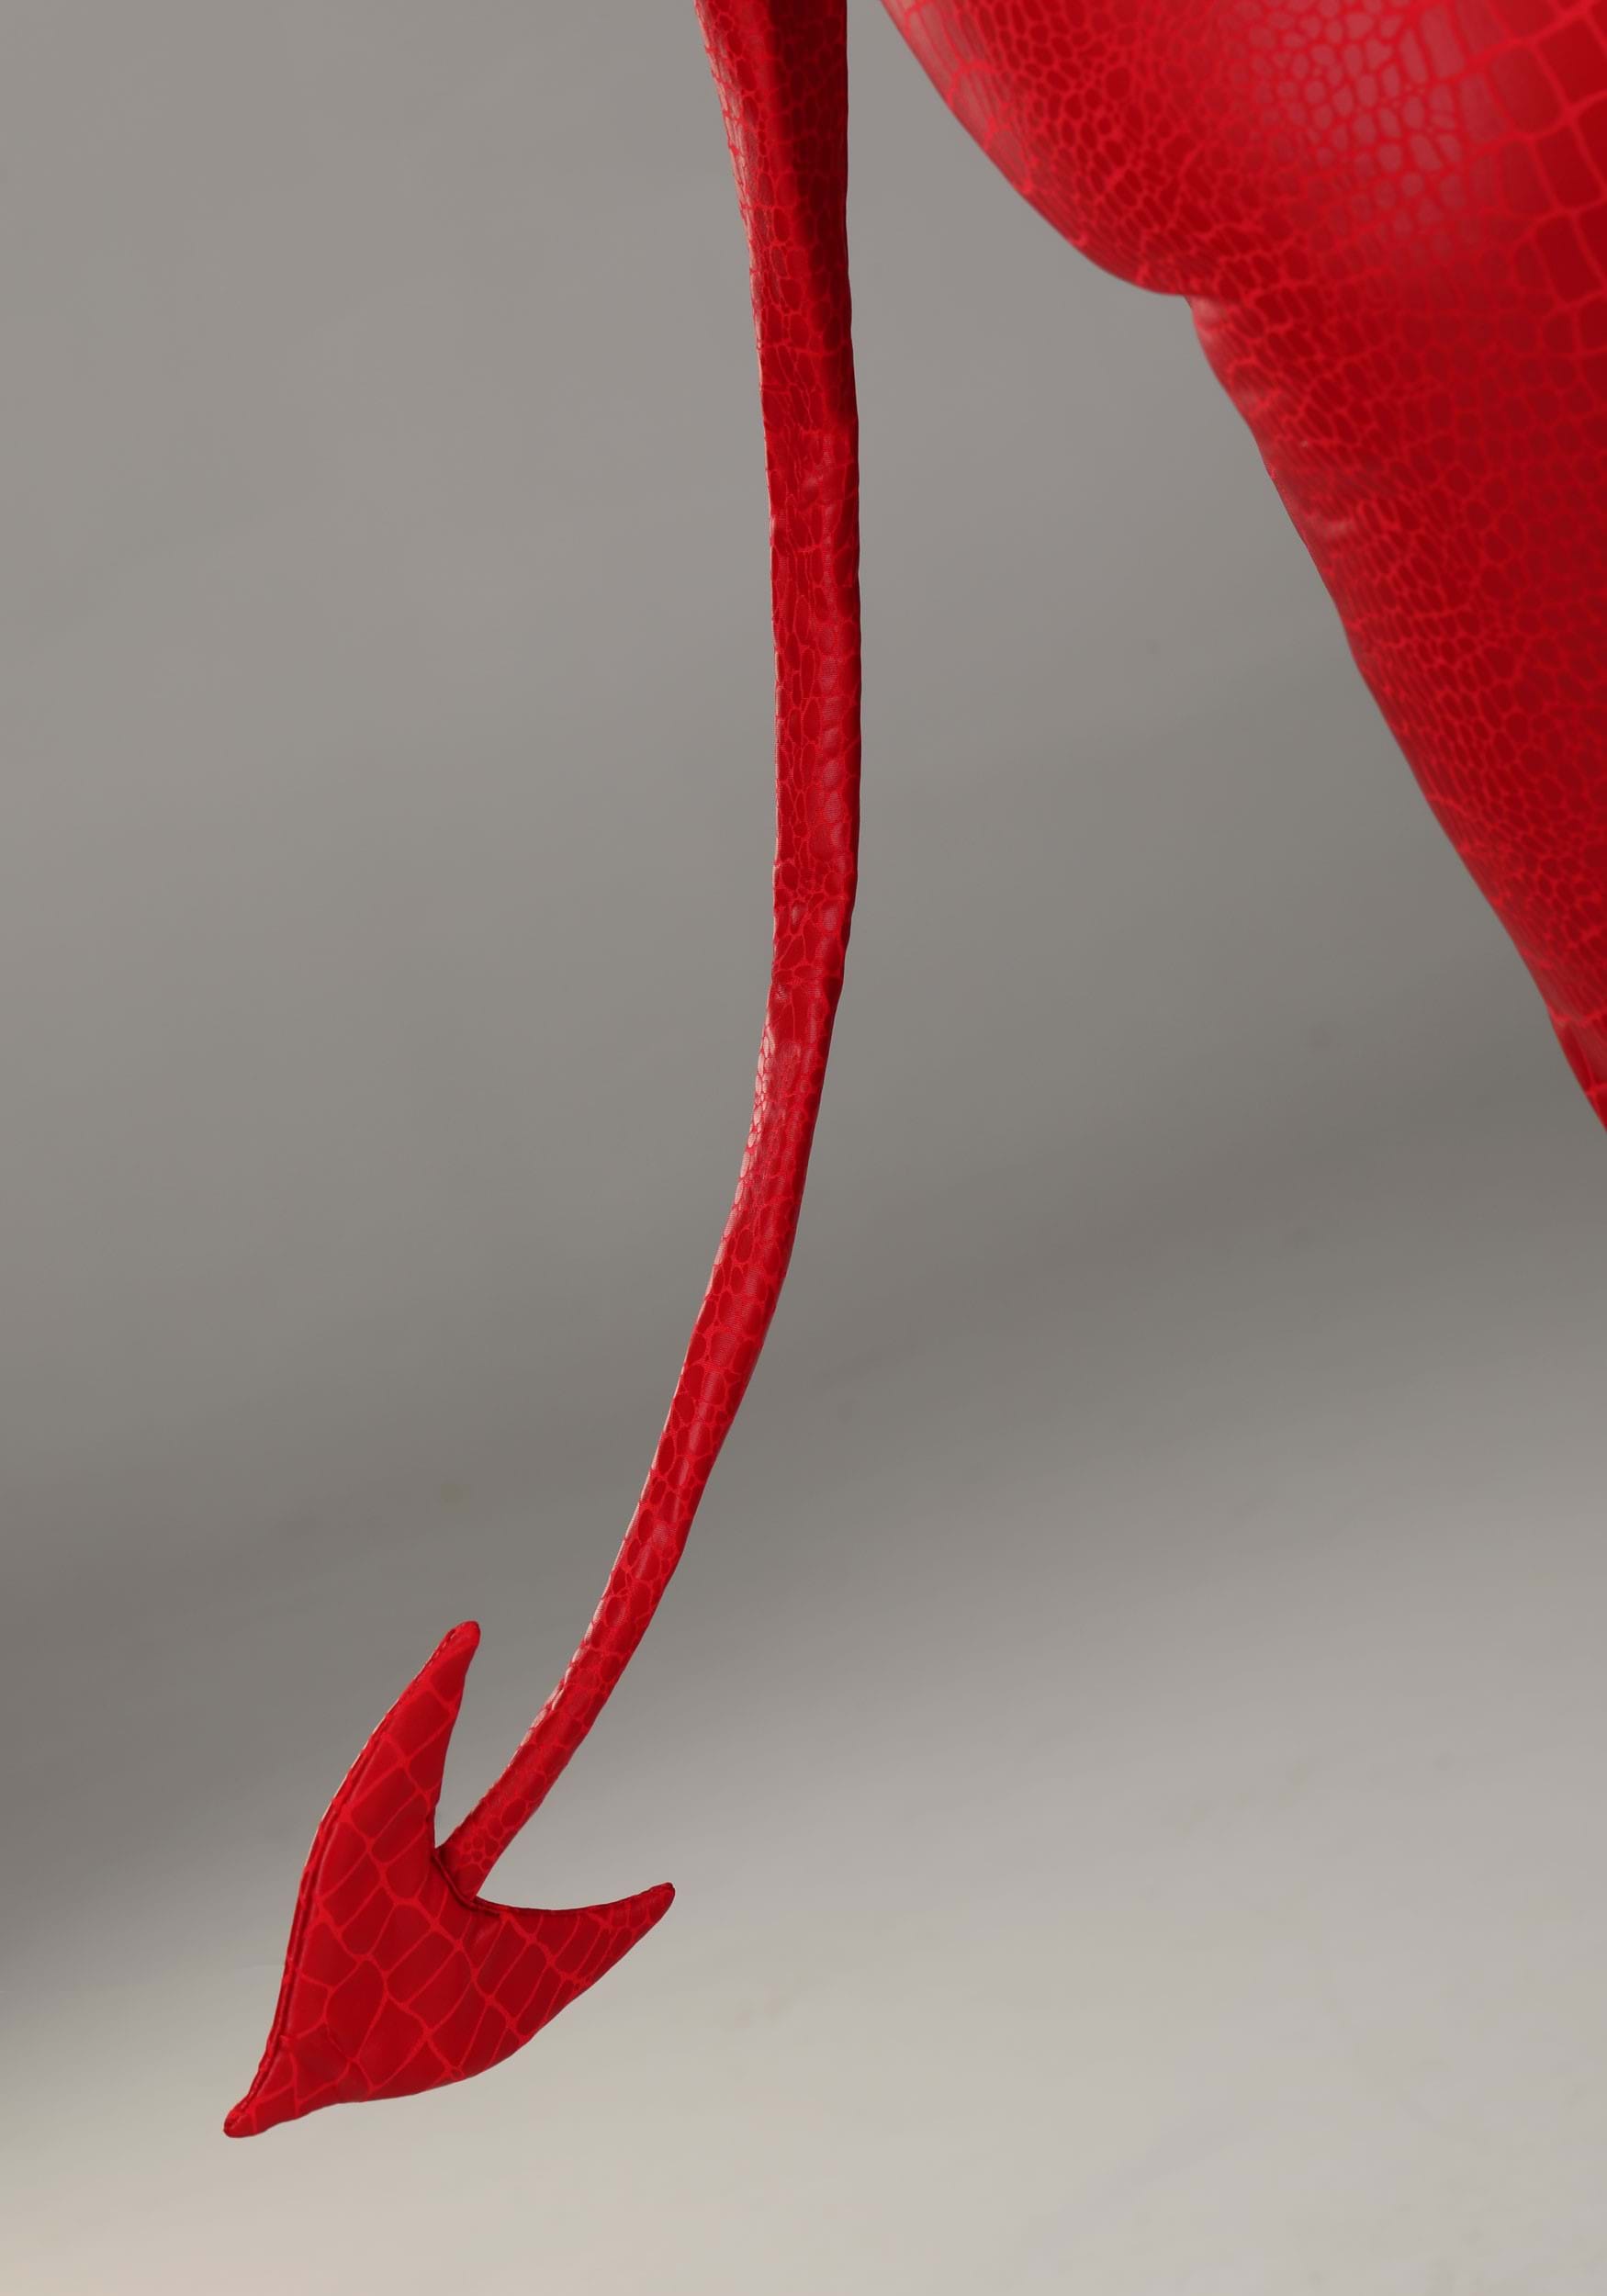 Devious Devil Costume For Women , Red Hot Jumpsuit